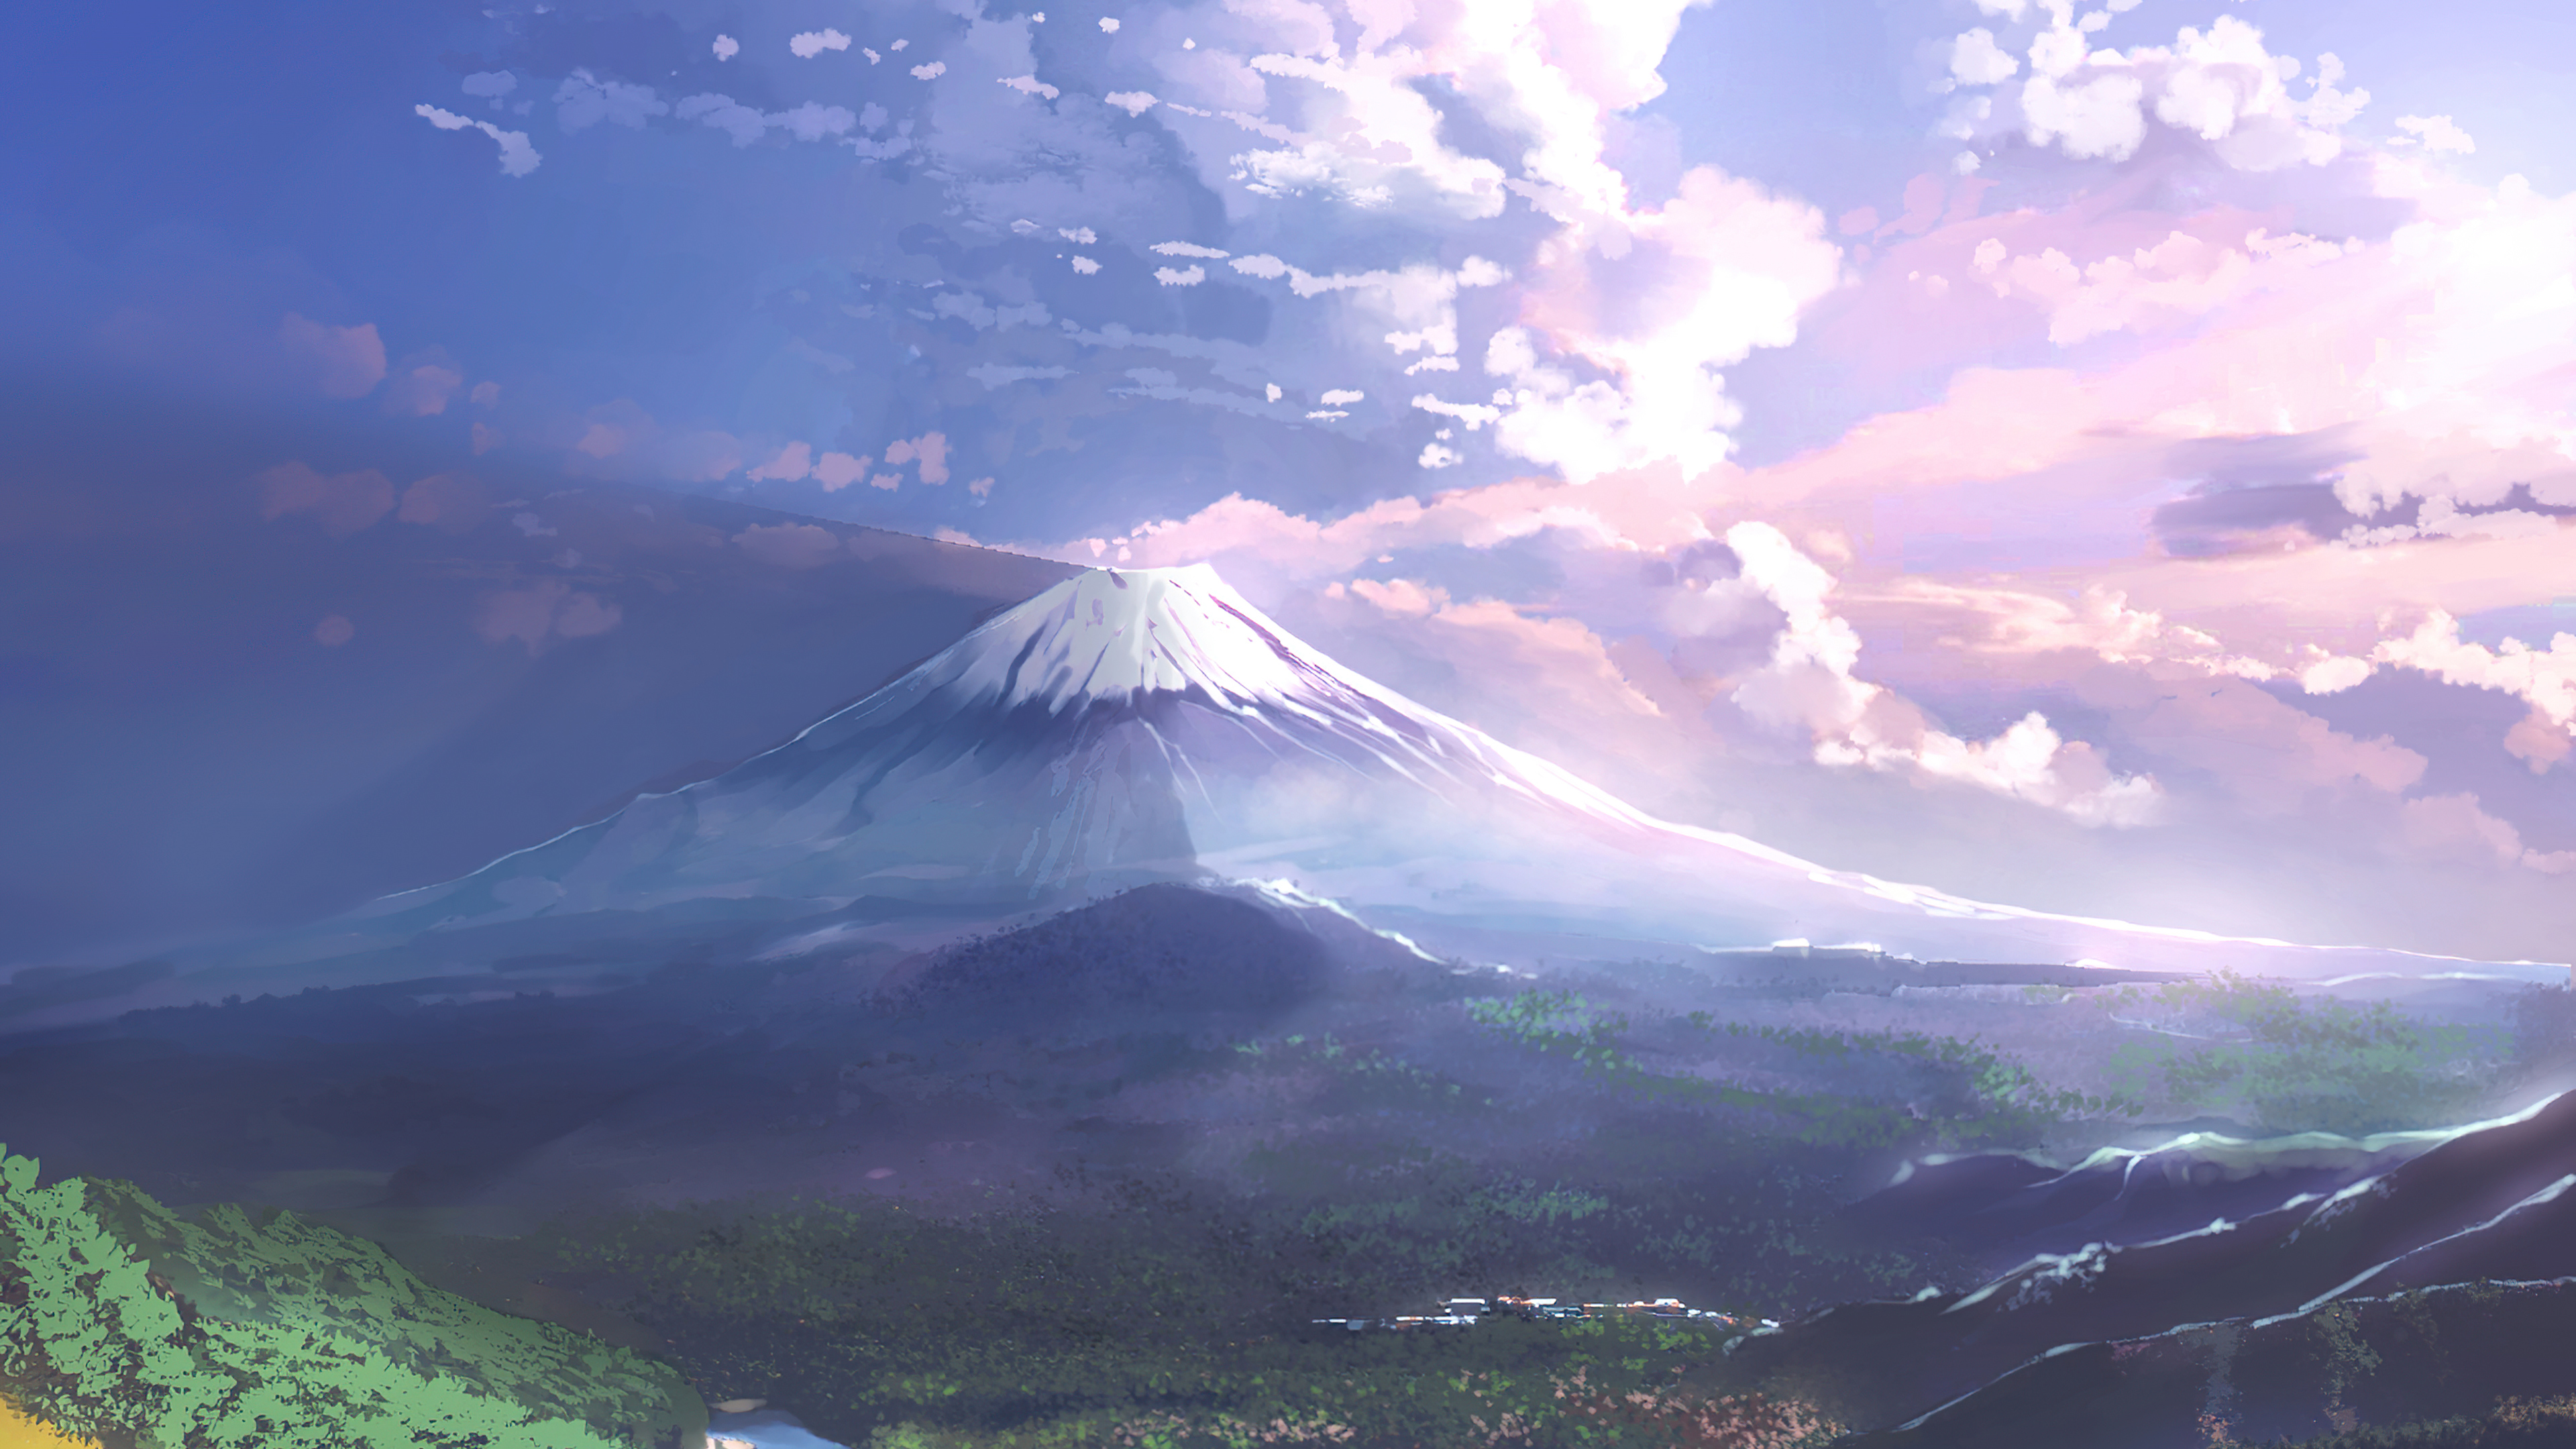 Mt Fuji Scenery Art 4k, HD Artist, 4k Wallpapers, Images, Backgrounds